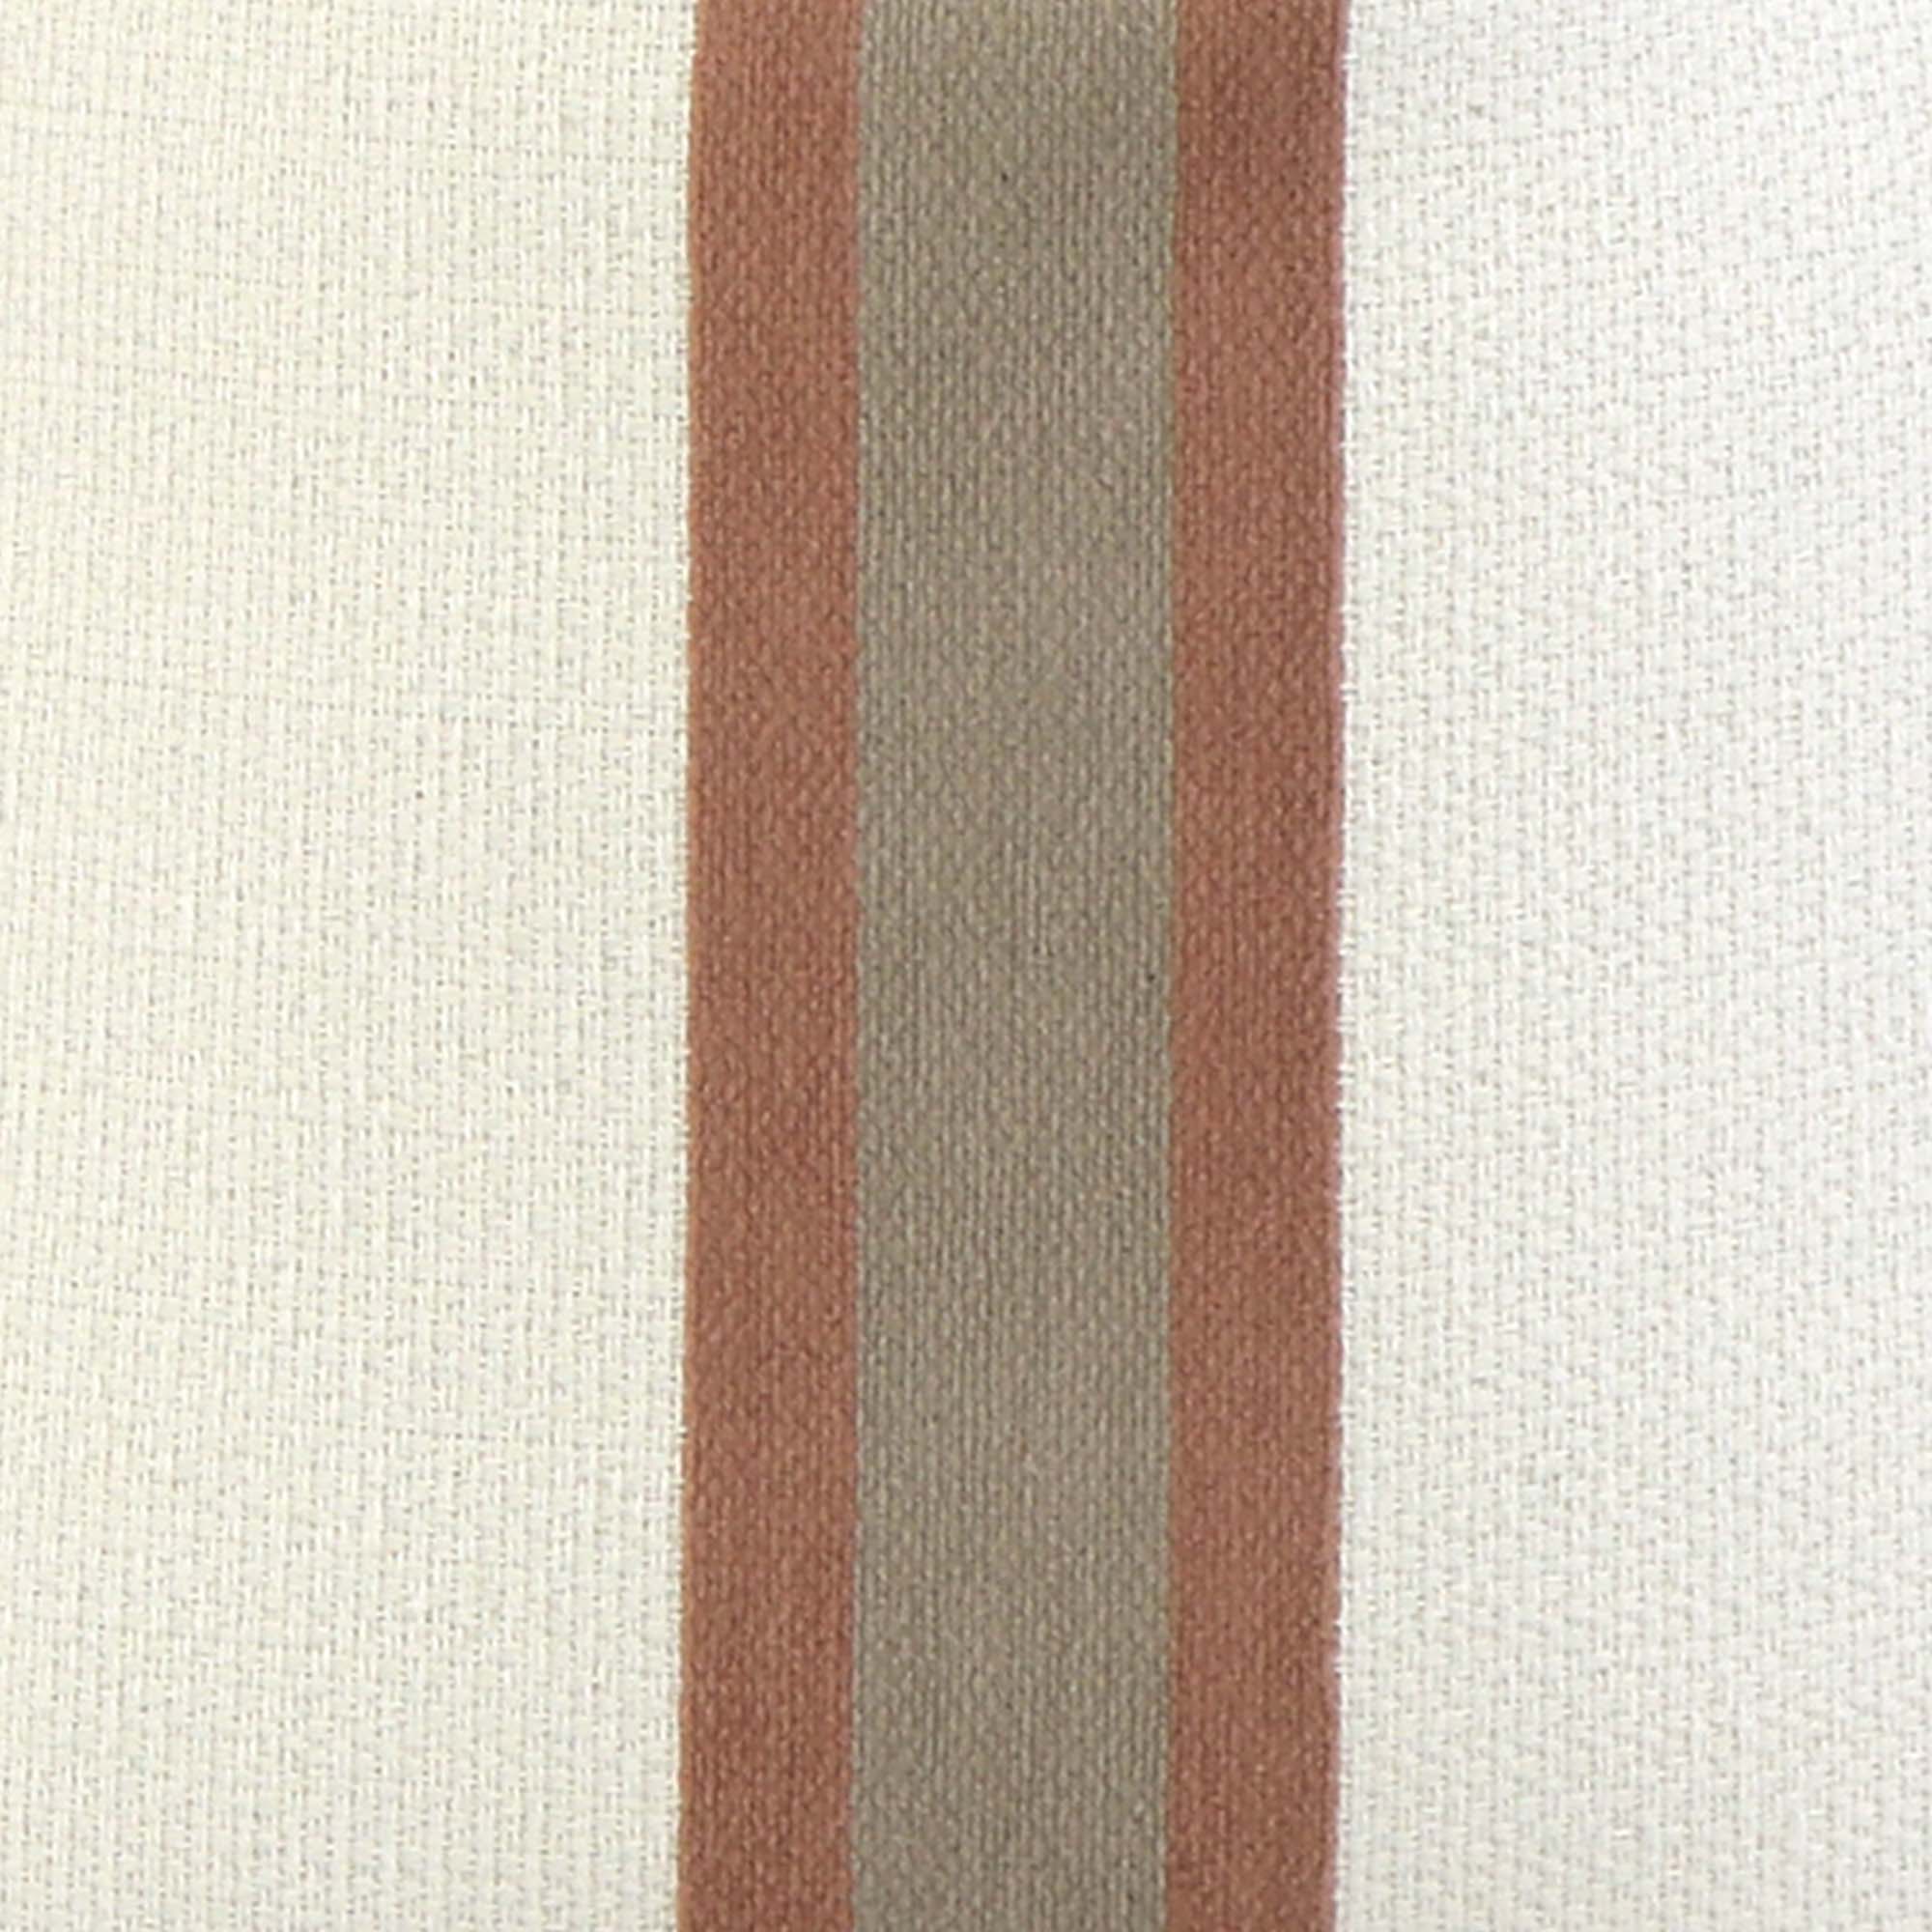 Abito Stripe Clay / 4x4 inch Fabric Swatch